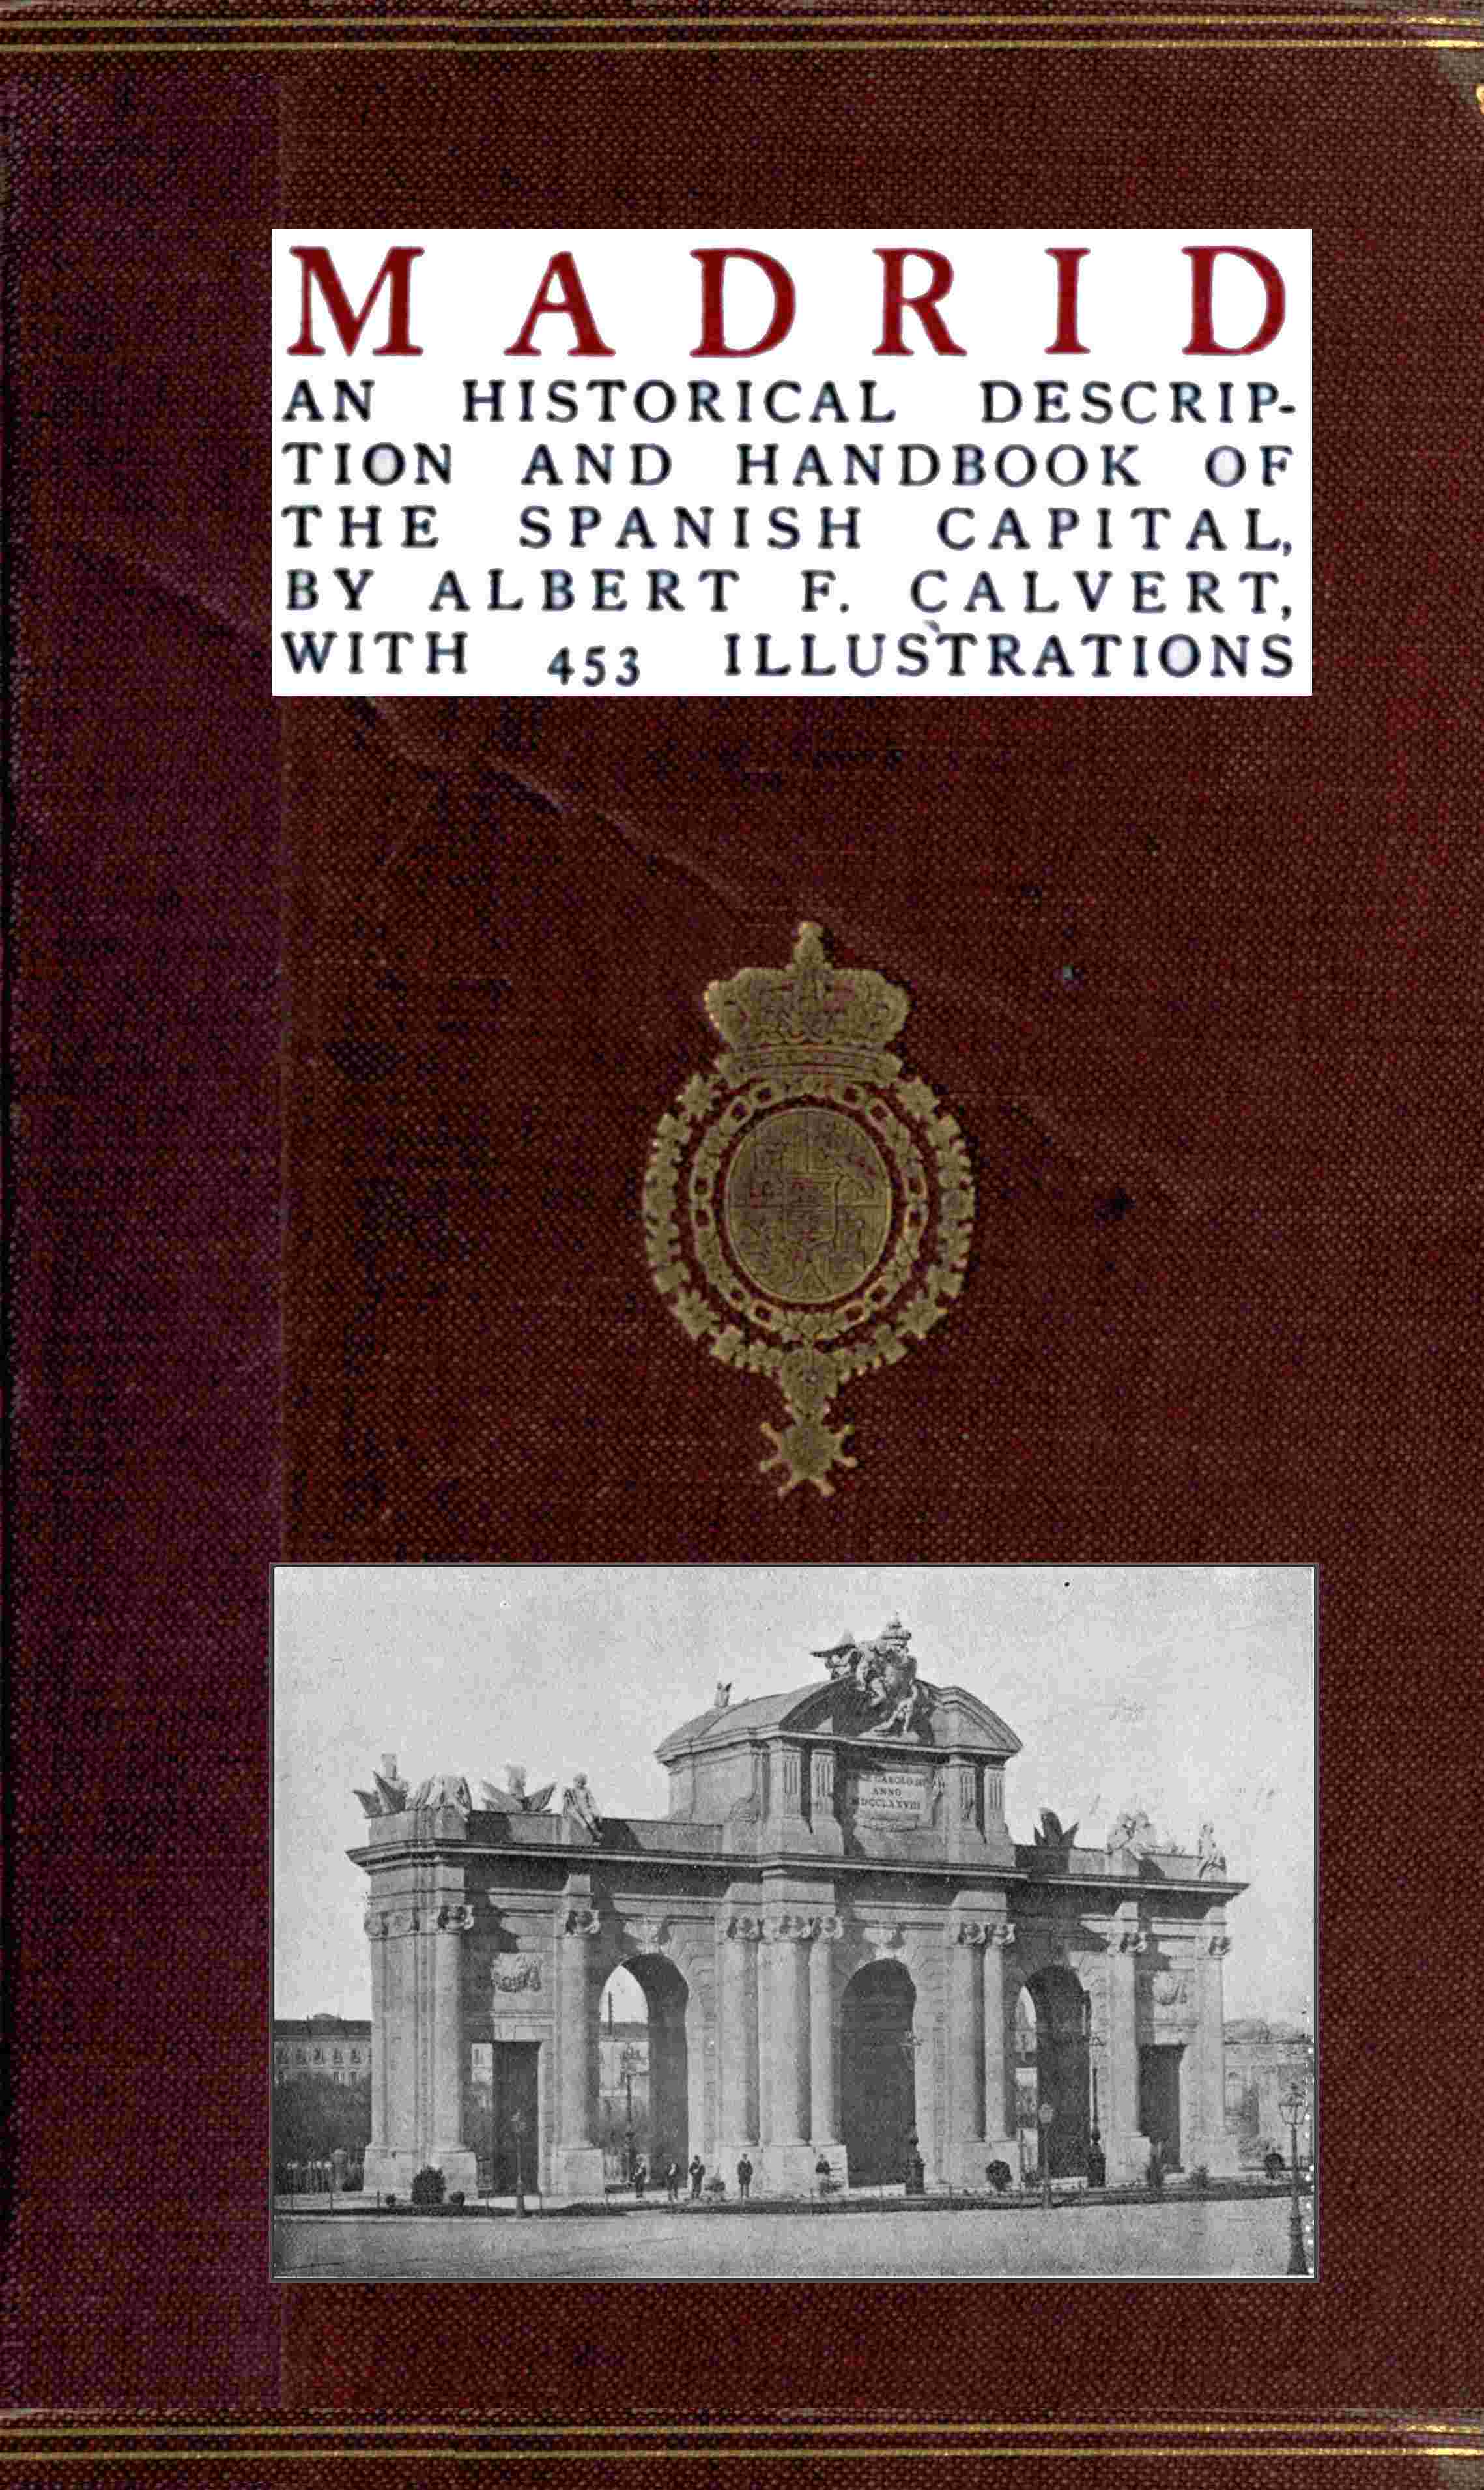 The Project Gutenberg eBook of Madrid, by Albert F. Calvert.